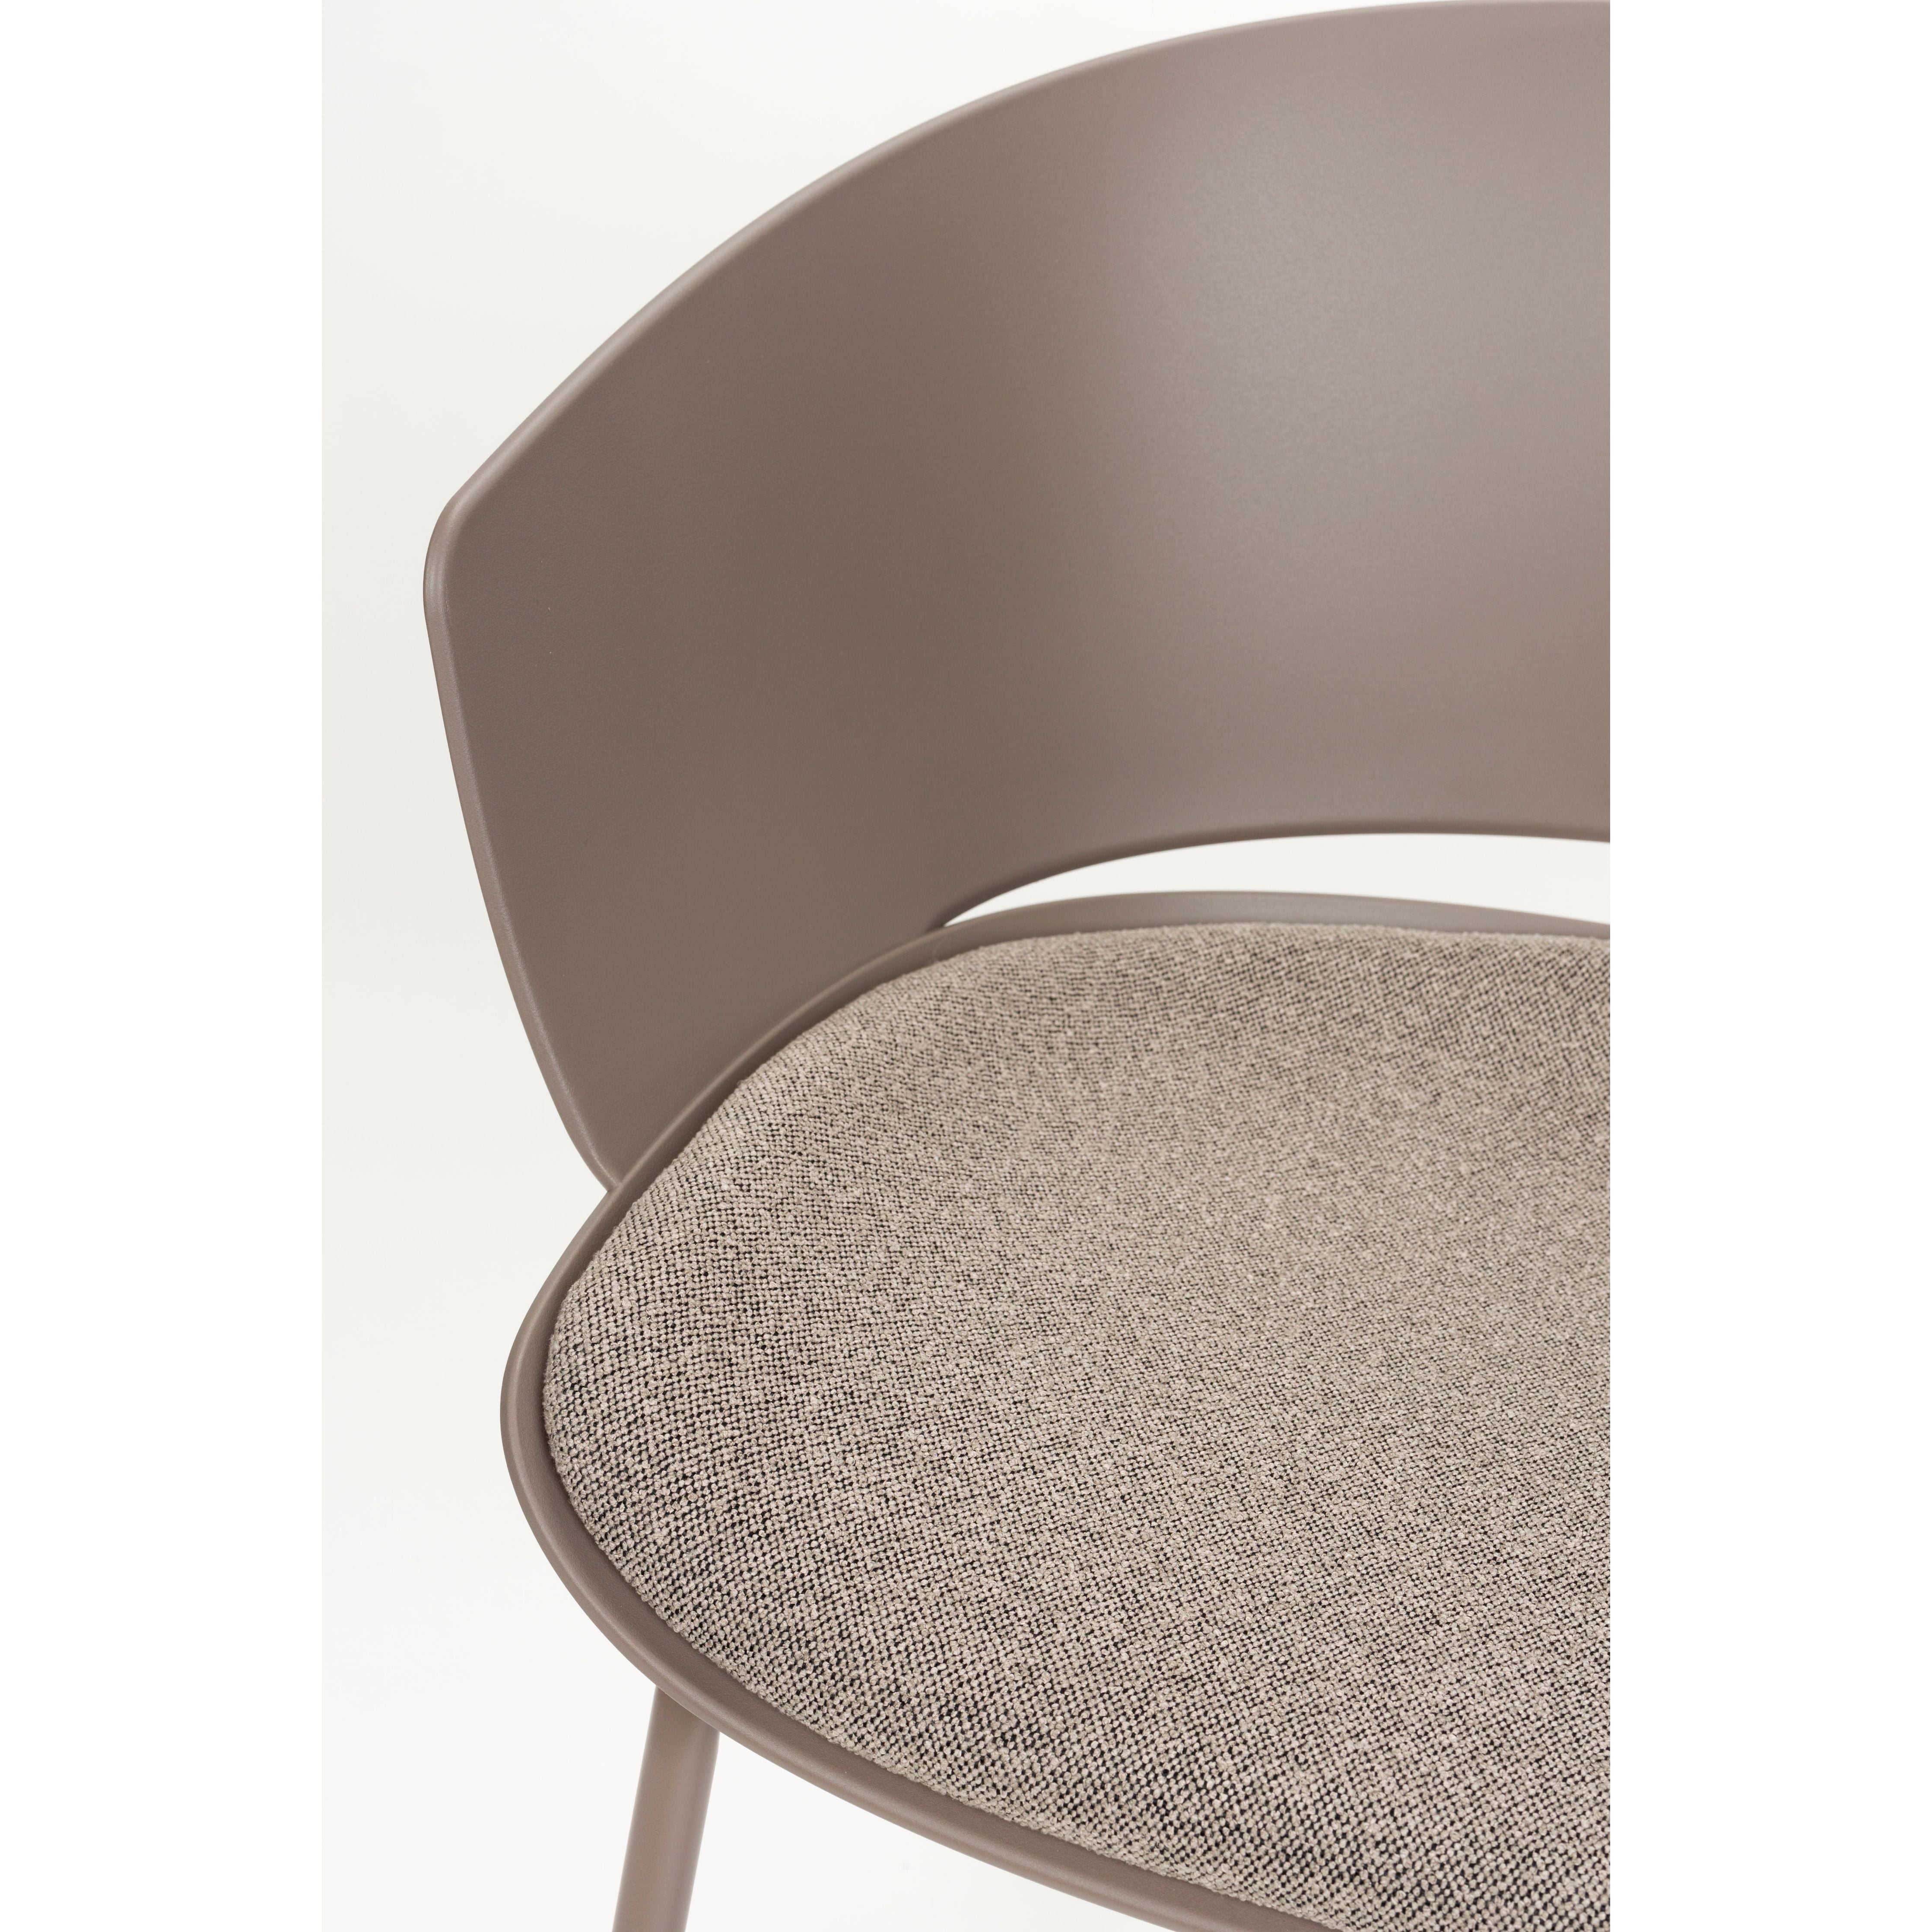 Chair jessica grey